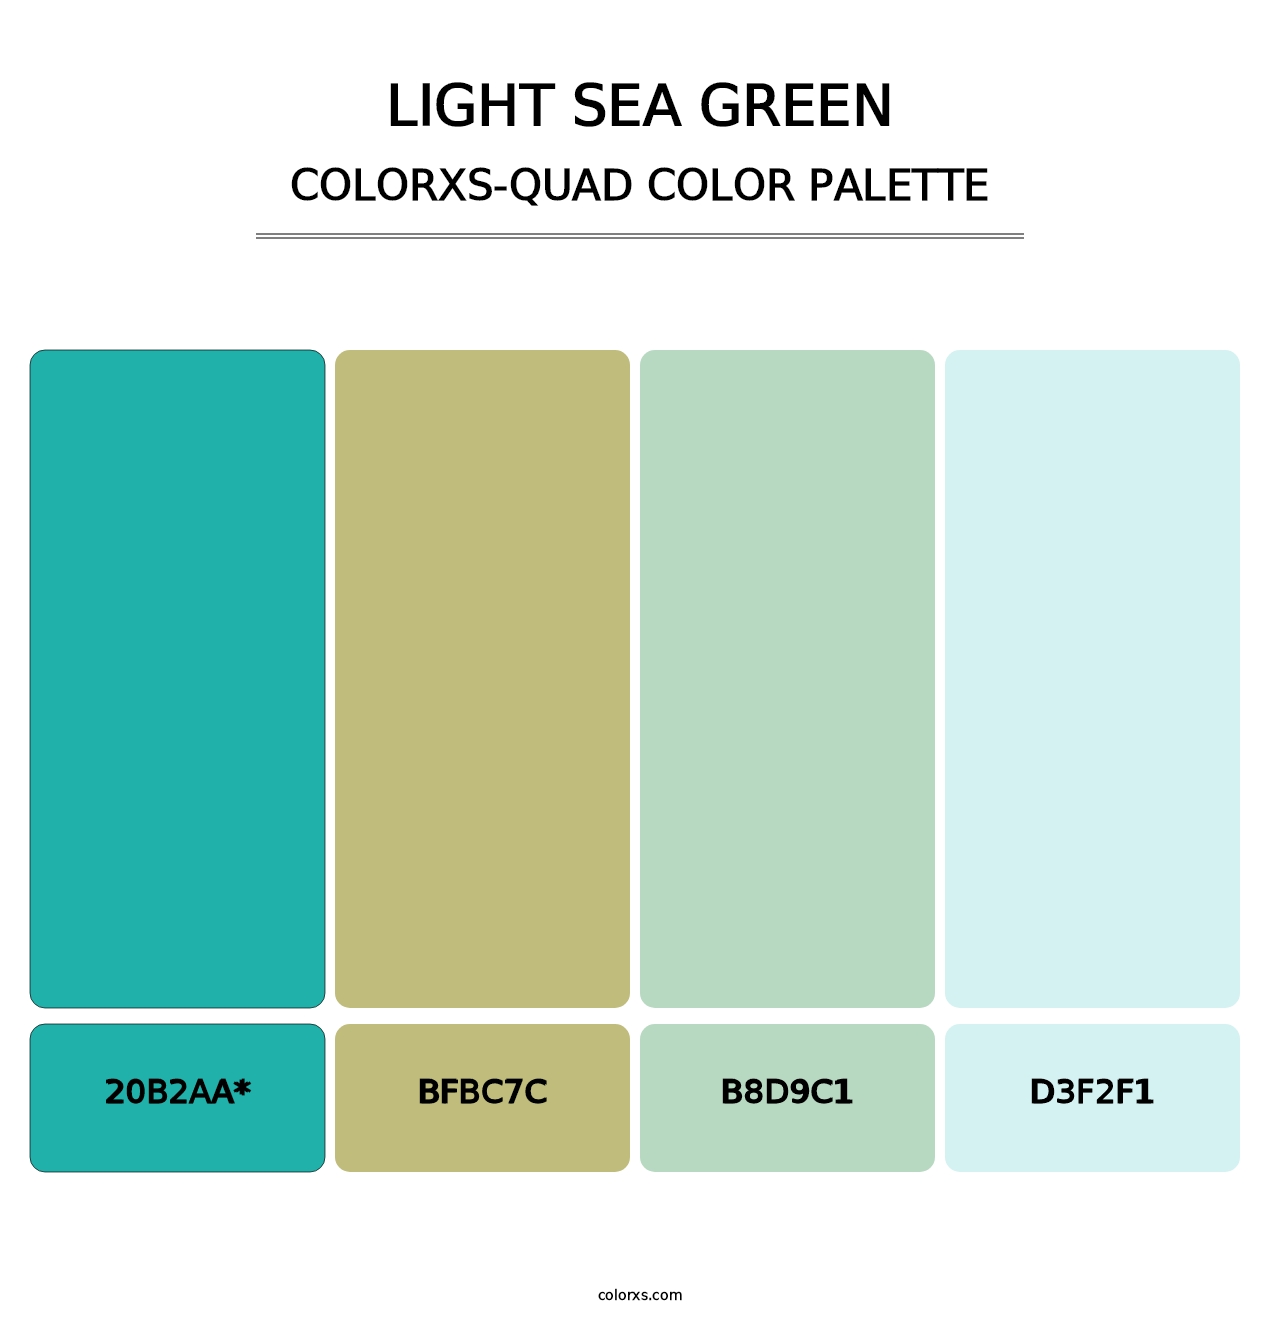 Light Sea Green - Colorxs Quad Palette